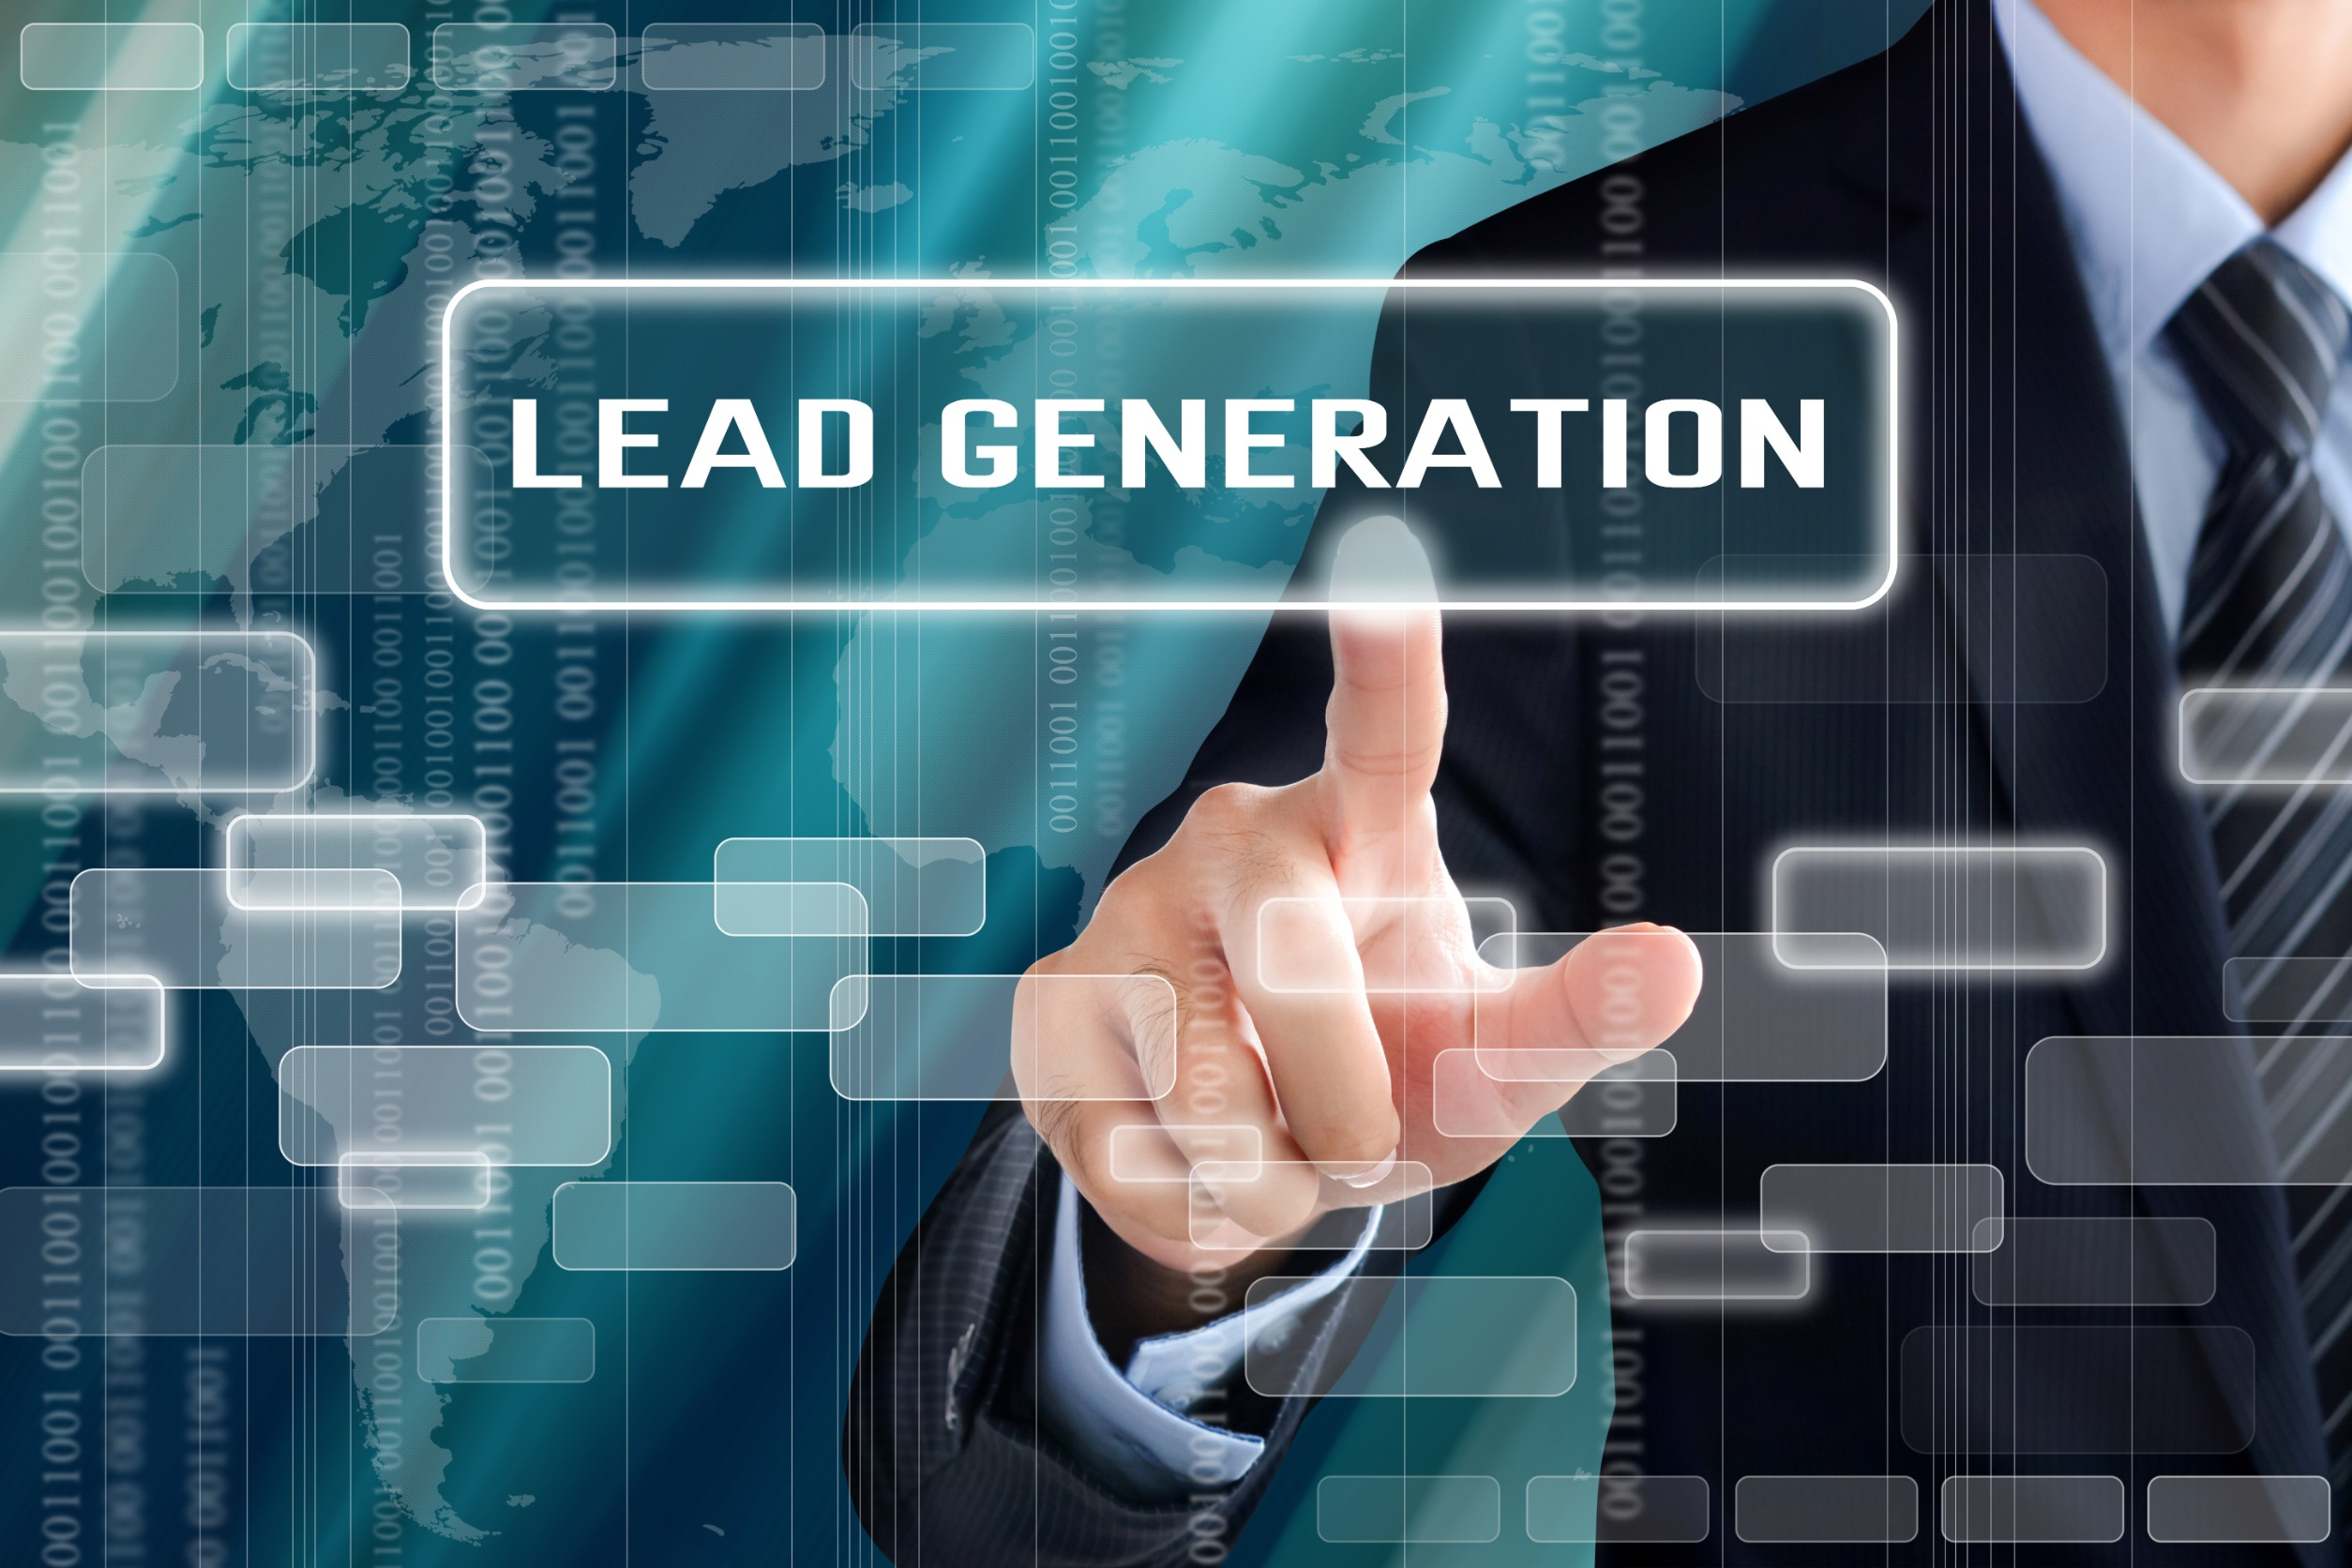 marketing for lead generation